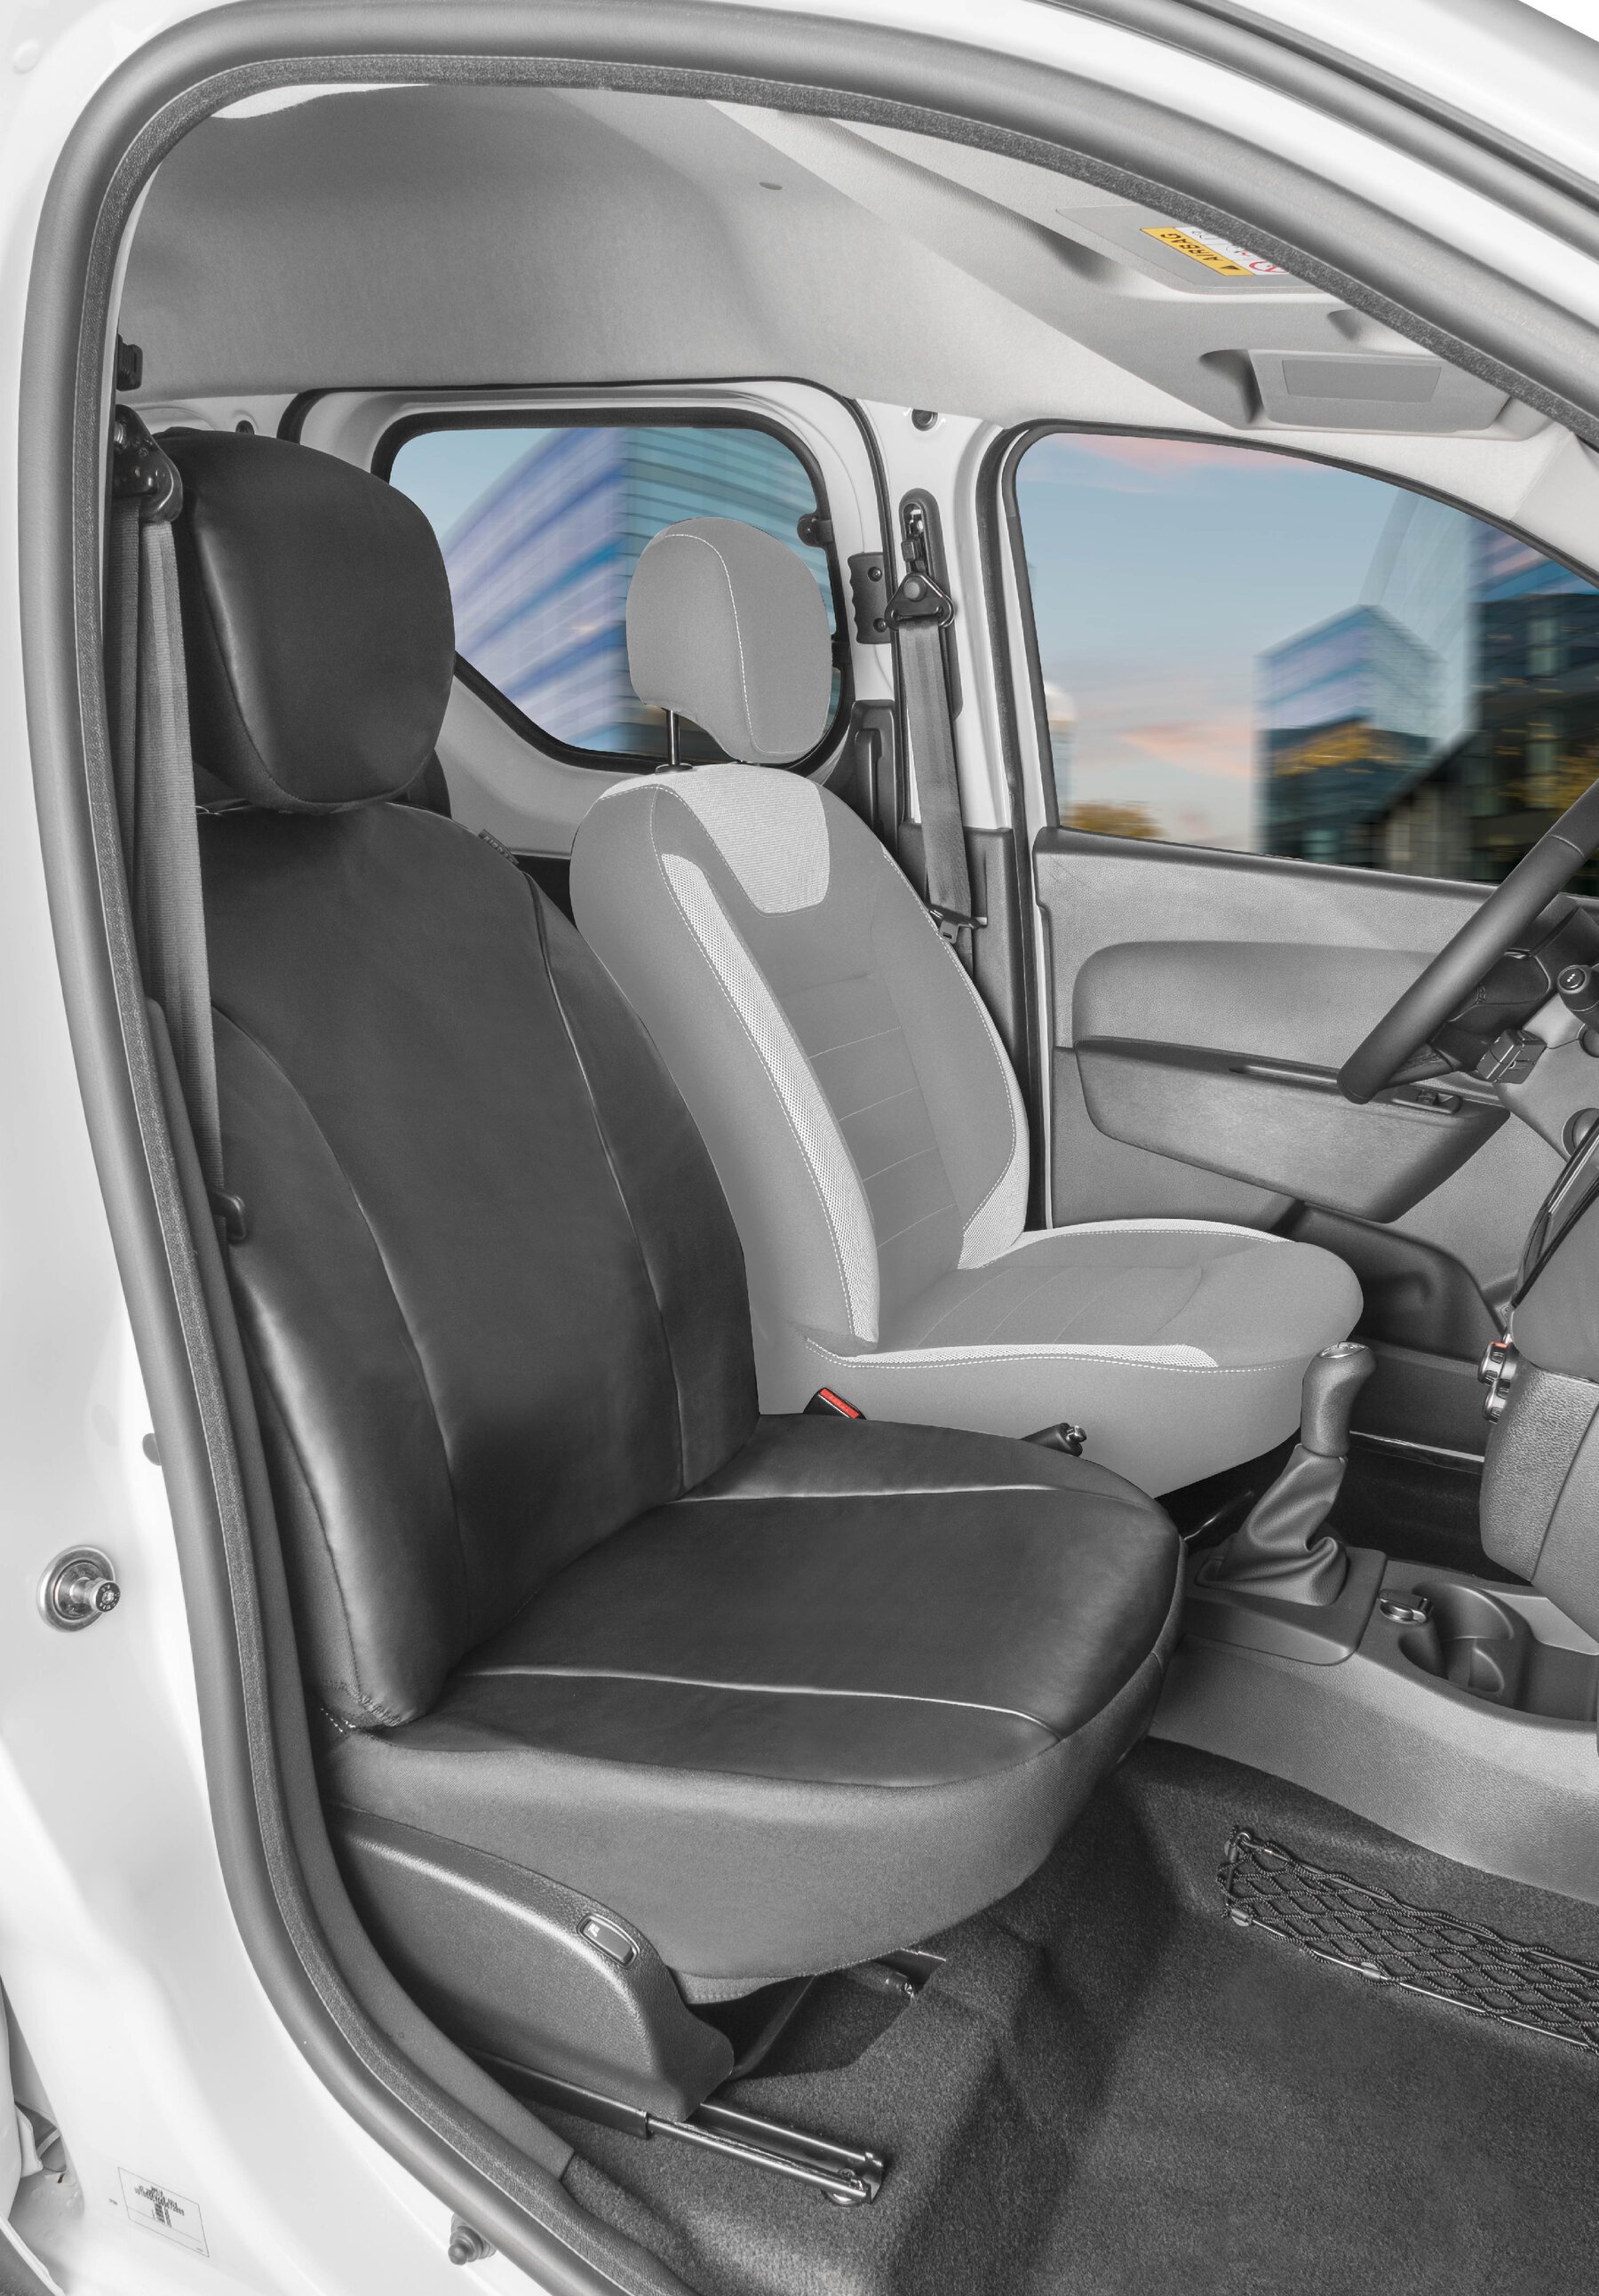 Passform Sitzbezug aus Kunstleder kompatibel mit Dacia Dokker, Einzelsitz Beifahrer